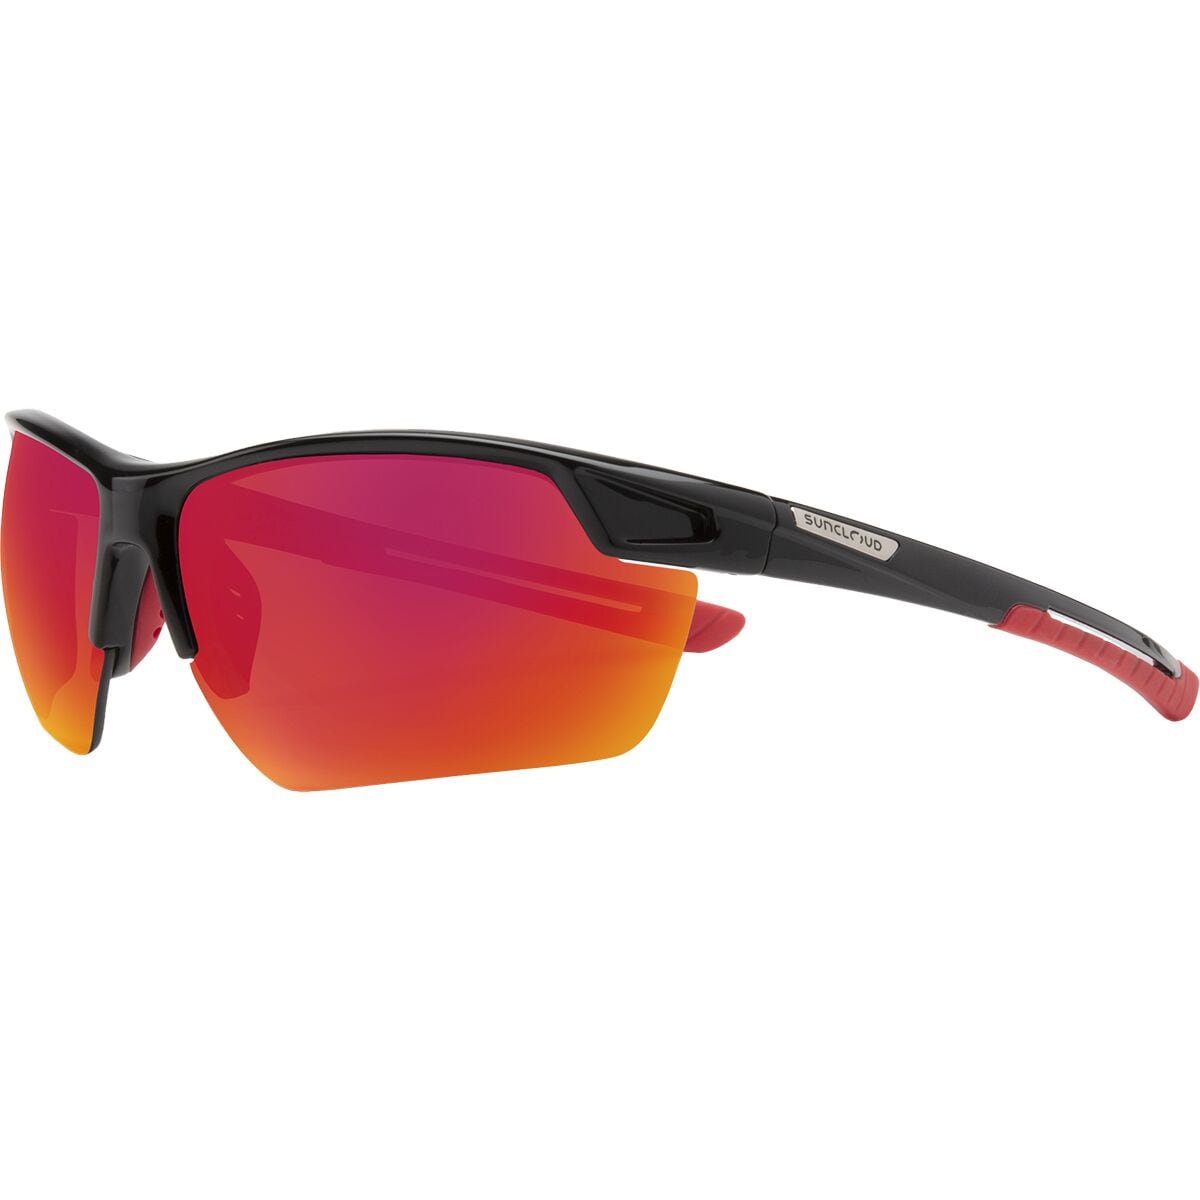 Поляризованные солнцезащитные очки contender Suncloud Polarized Optics, цвет black/polarized red mirror очки солнцезащитные stylemark polarized l1475c